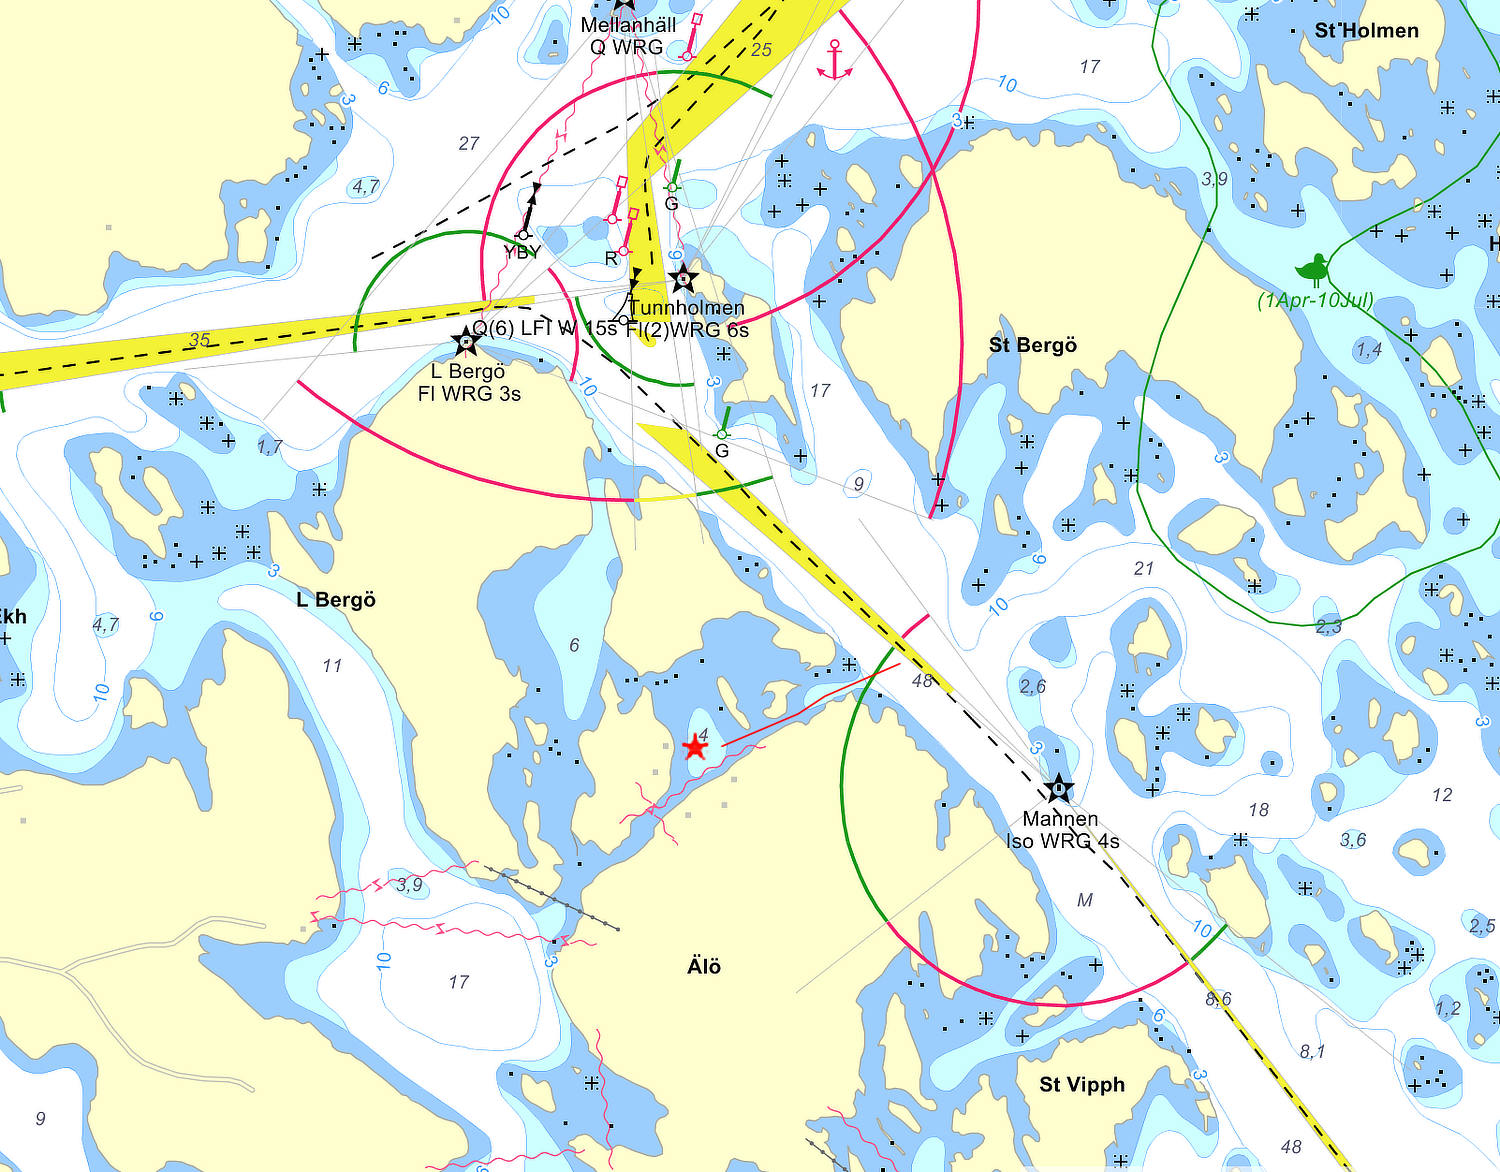 Älö anchorage Coordinates | Cruising Attitude Sailing Blog - Discovery 55